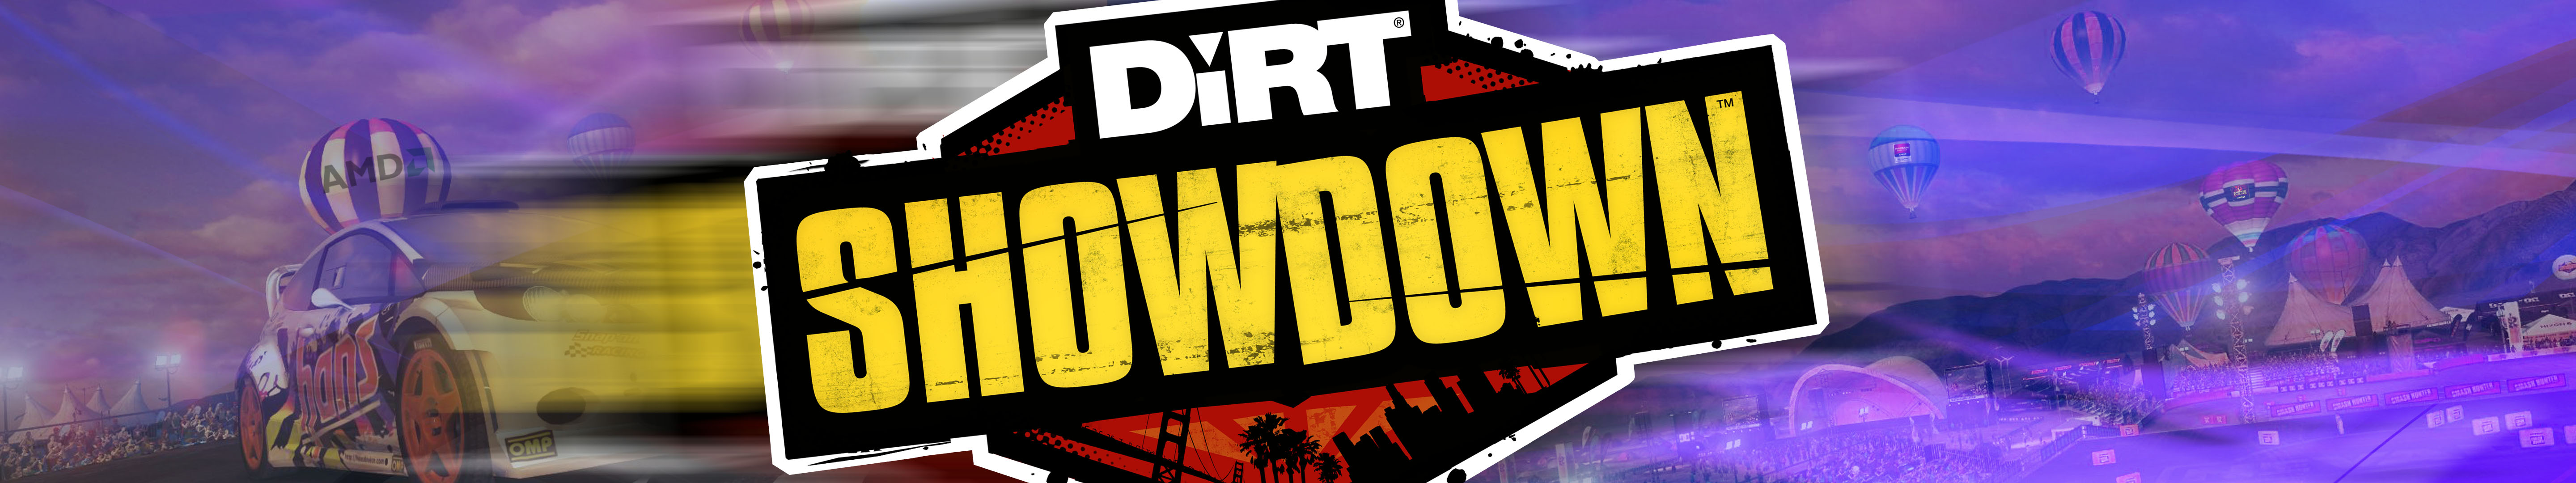 Dirt Showdown Triple Monitor Wallpapers Multi Monitor Gaming 5760x1080